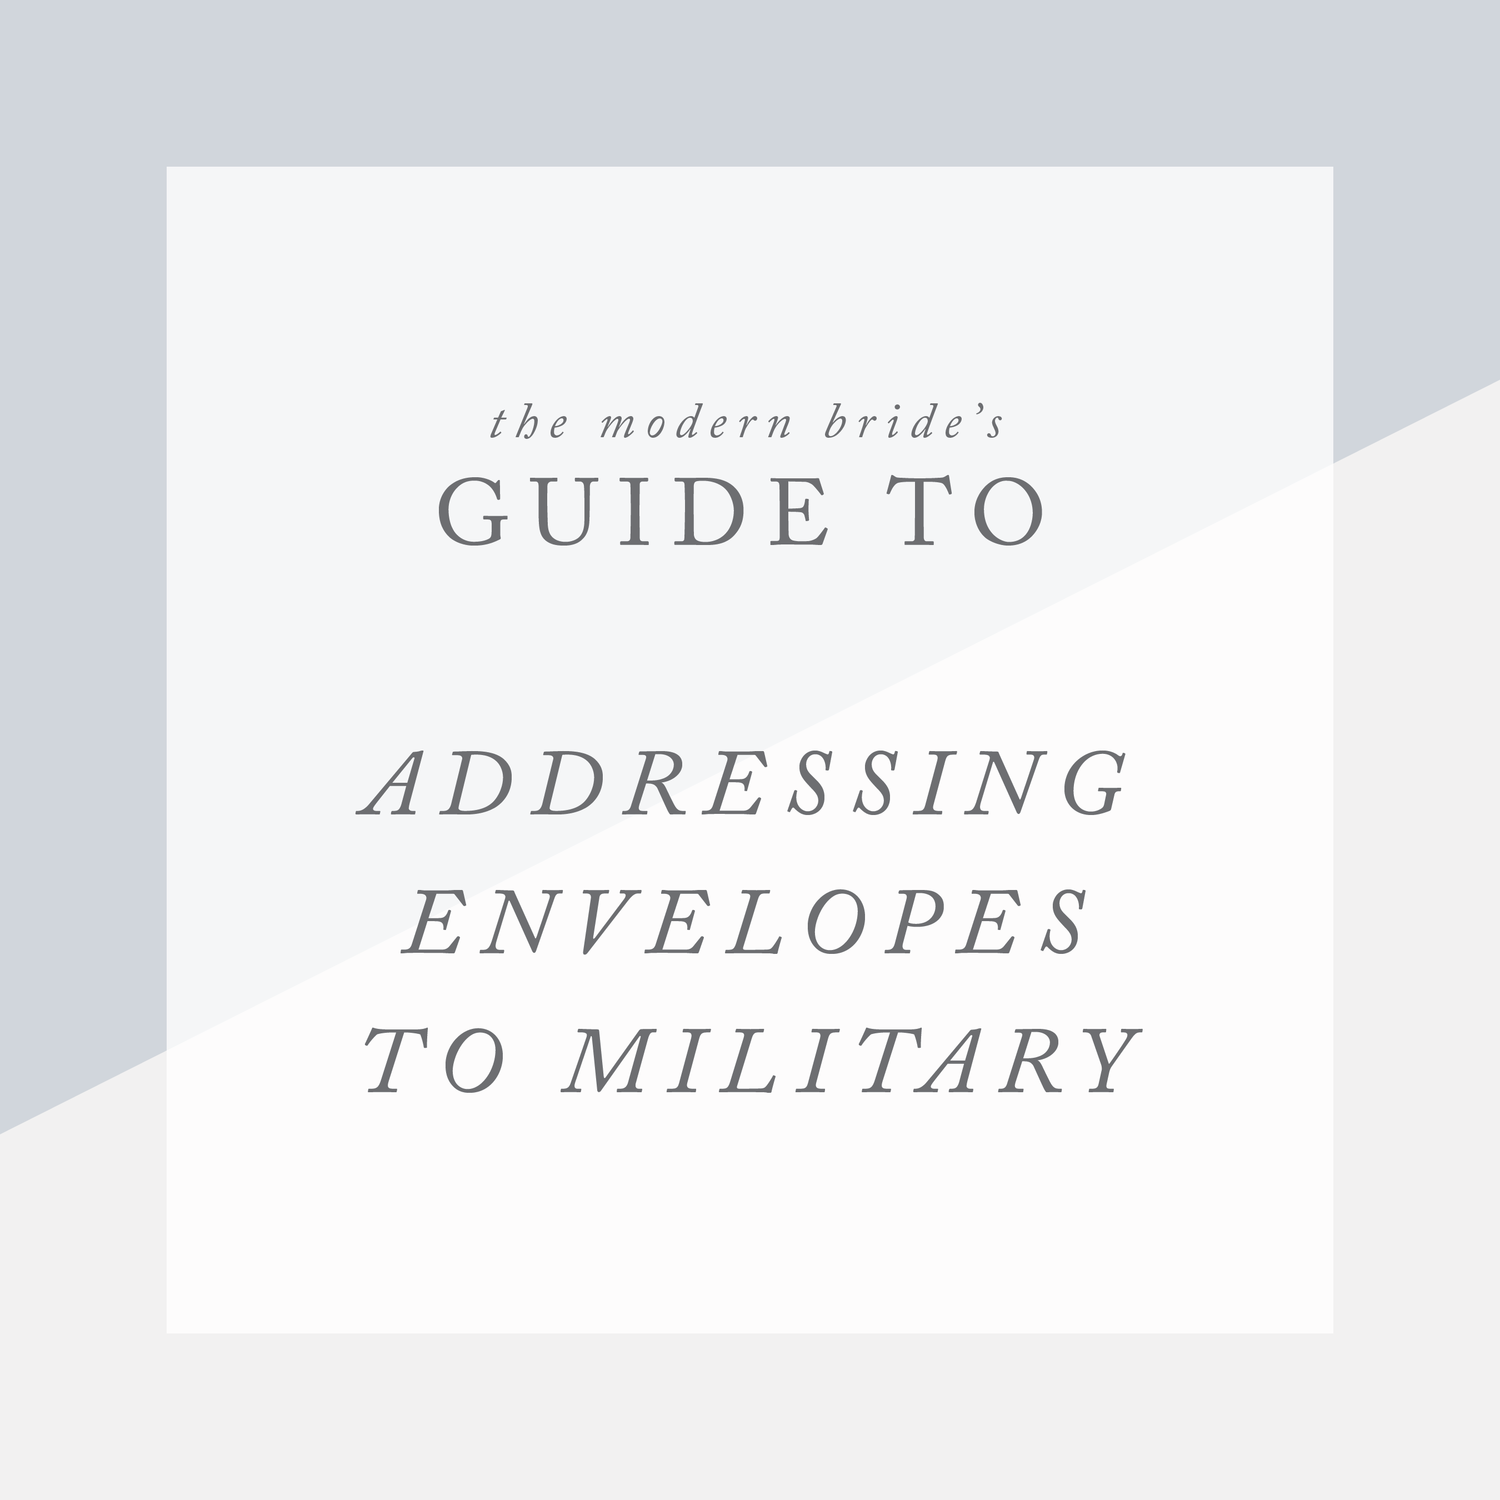 On Three Designs — Addressing Military on Envelopes